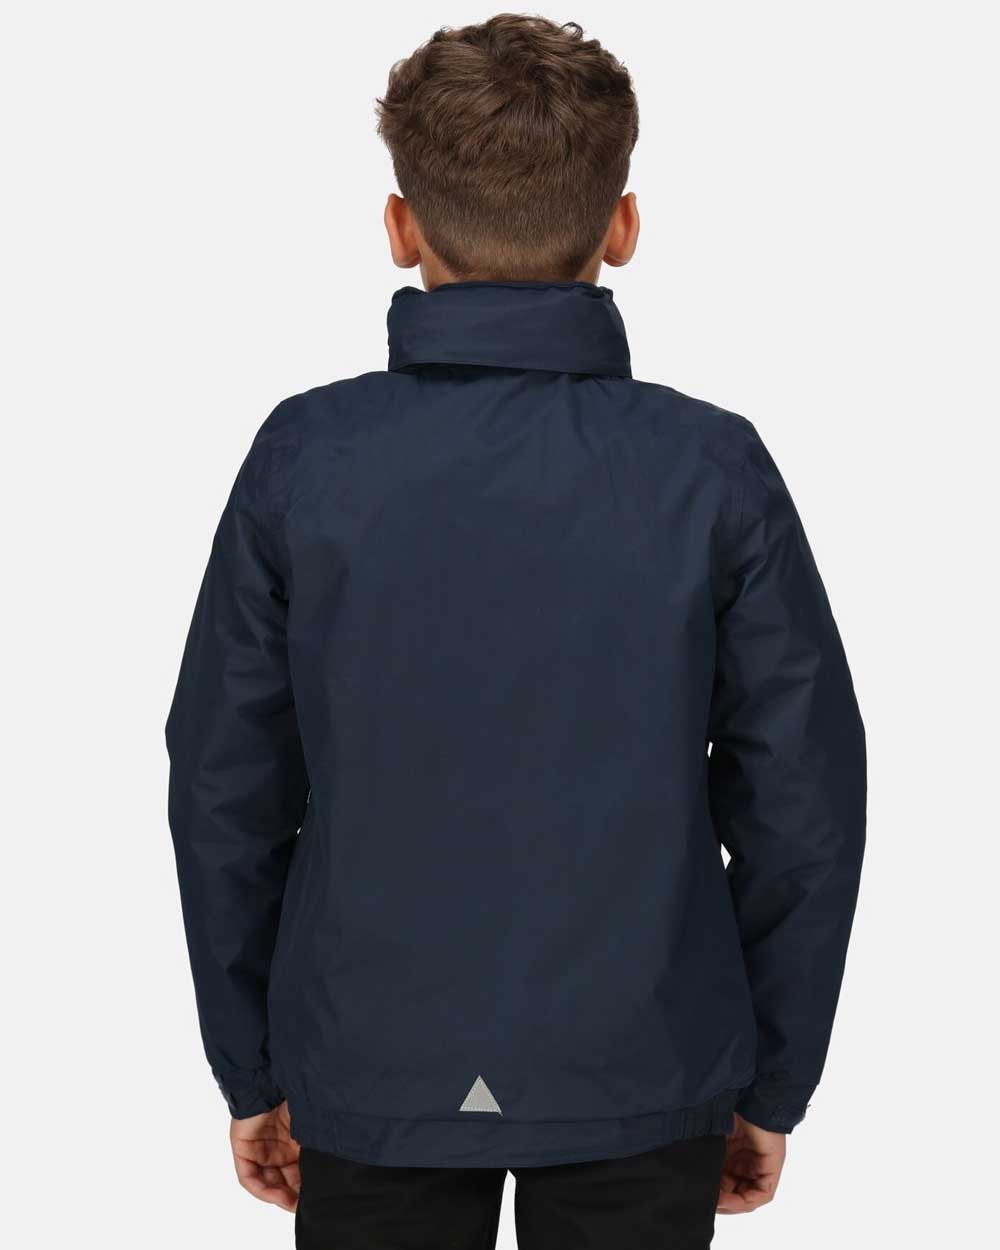 Regatta Kids Dover Fleece Lined Jacket in Navy/Navy 